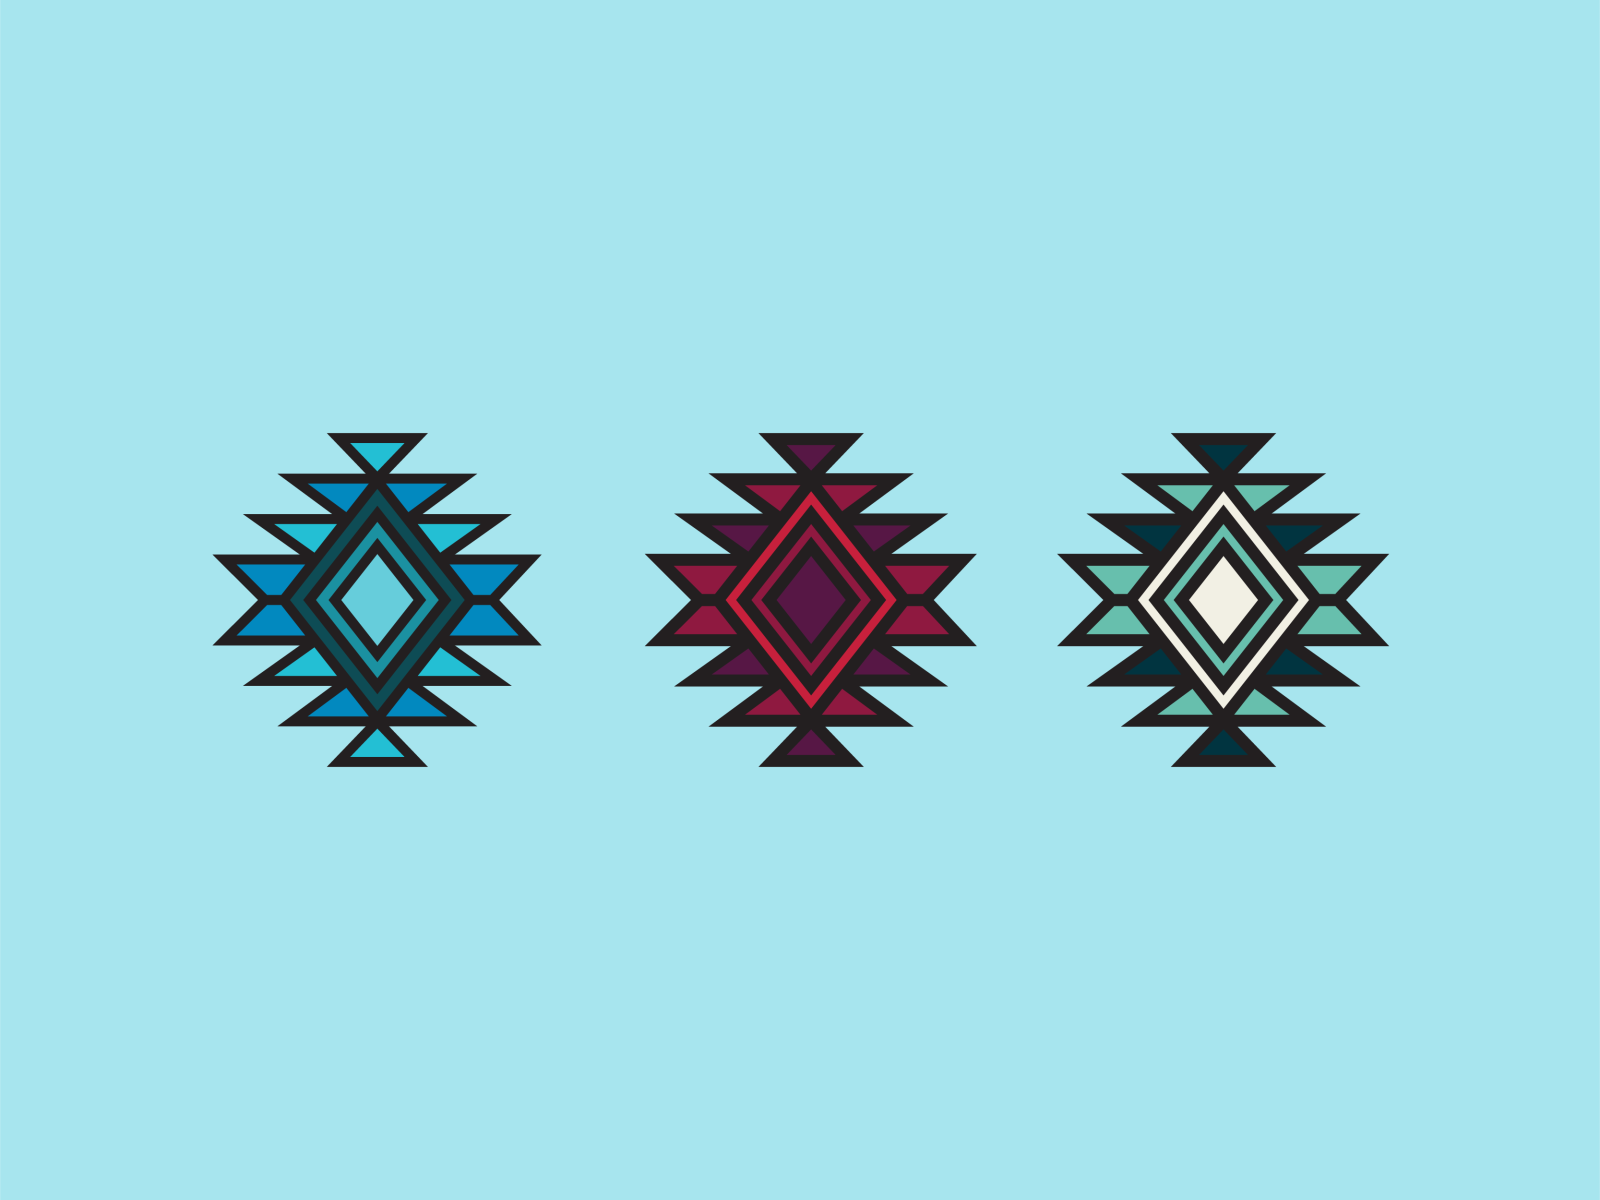 Aztec Pattern by Turner Jackson on Dribbble